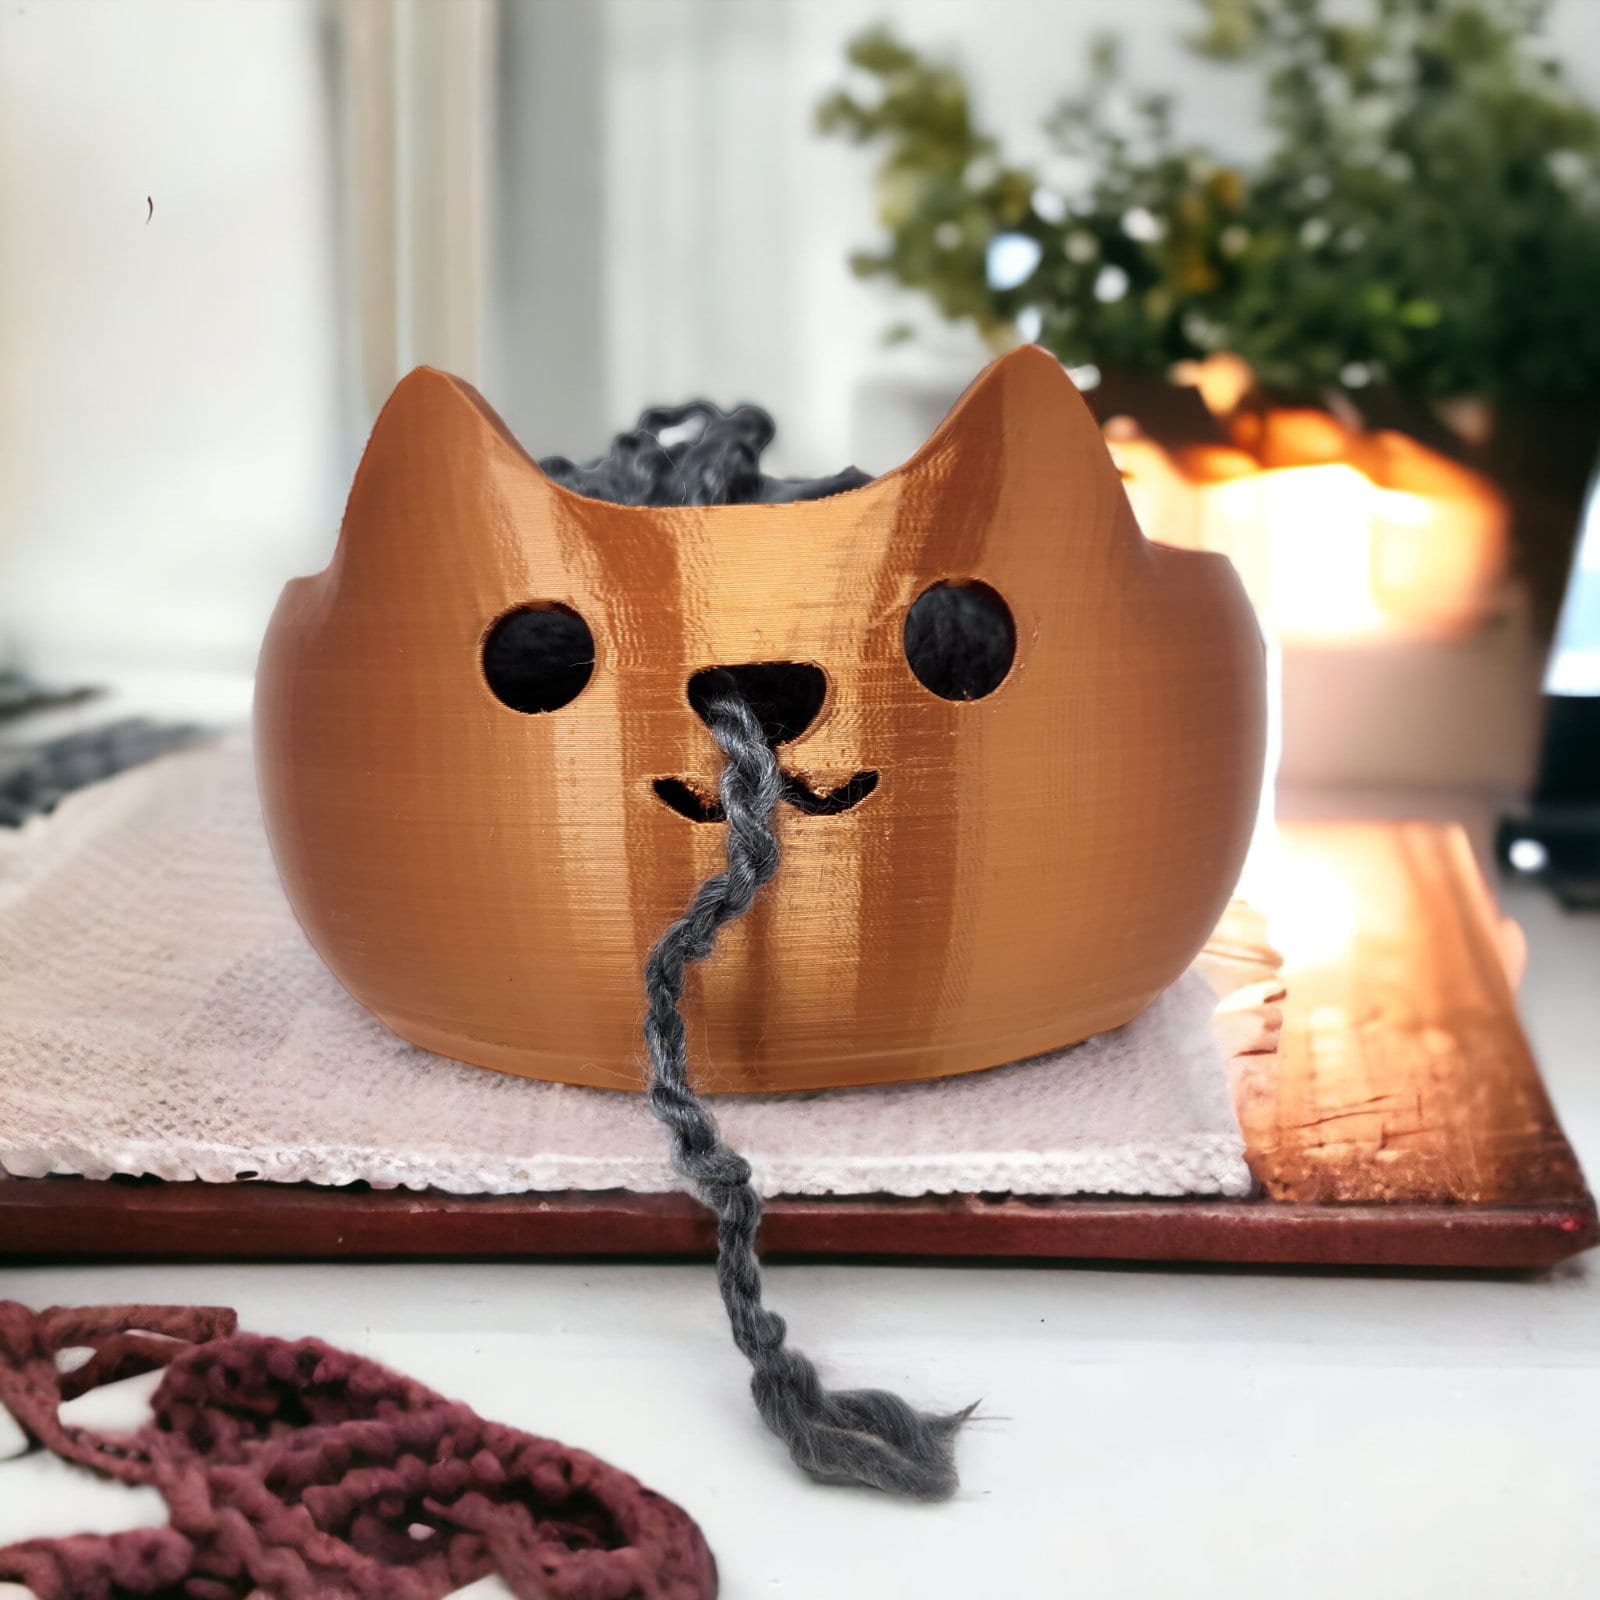 Knitty Kitty Yarn Bowl, Tabby Cat yarn bowl with daisies